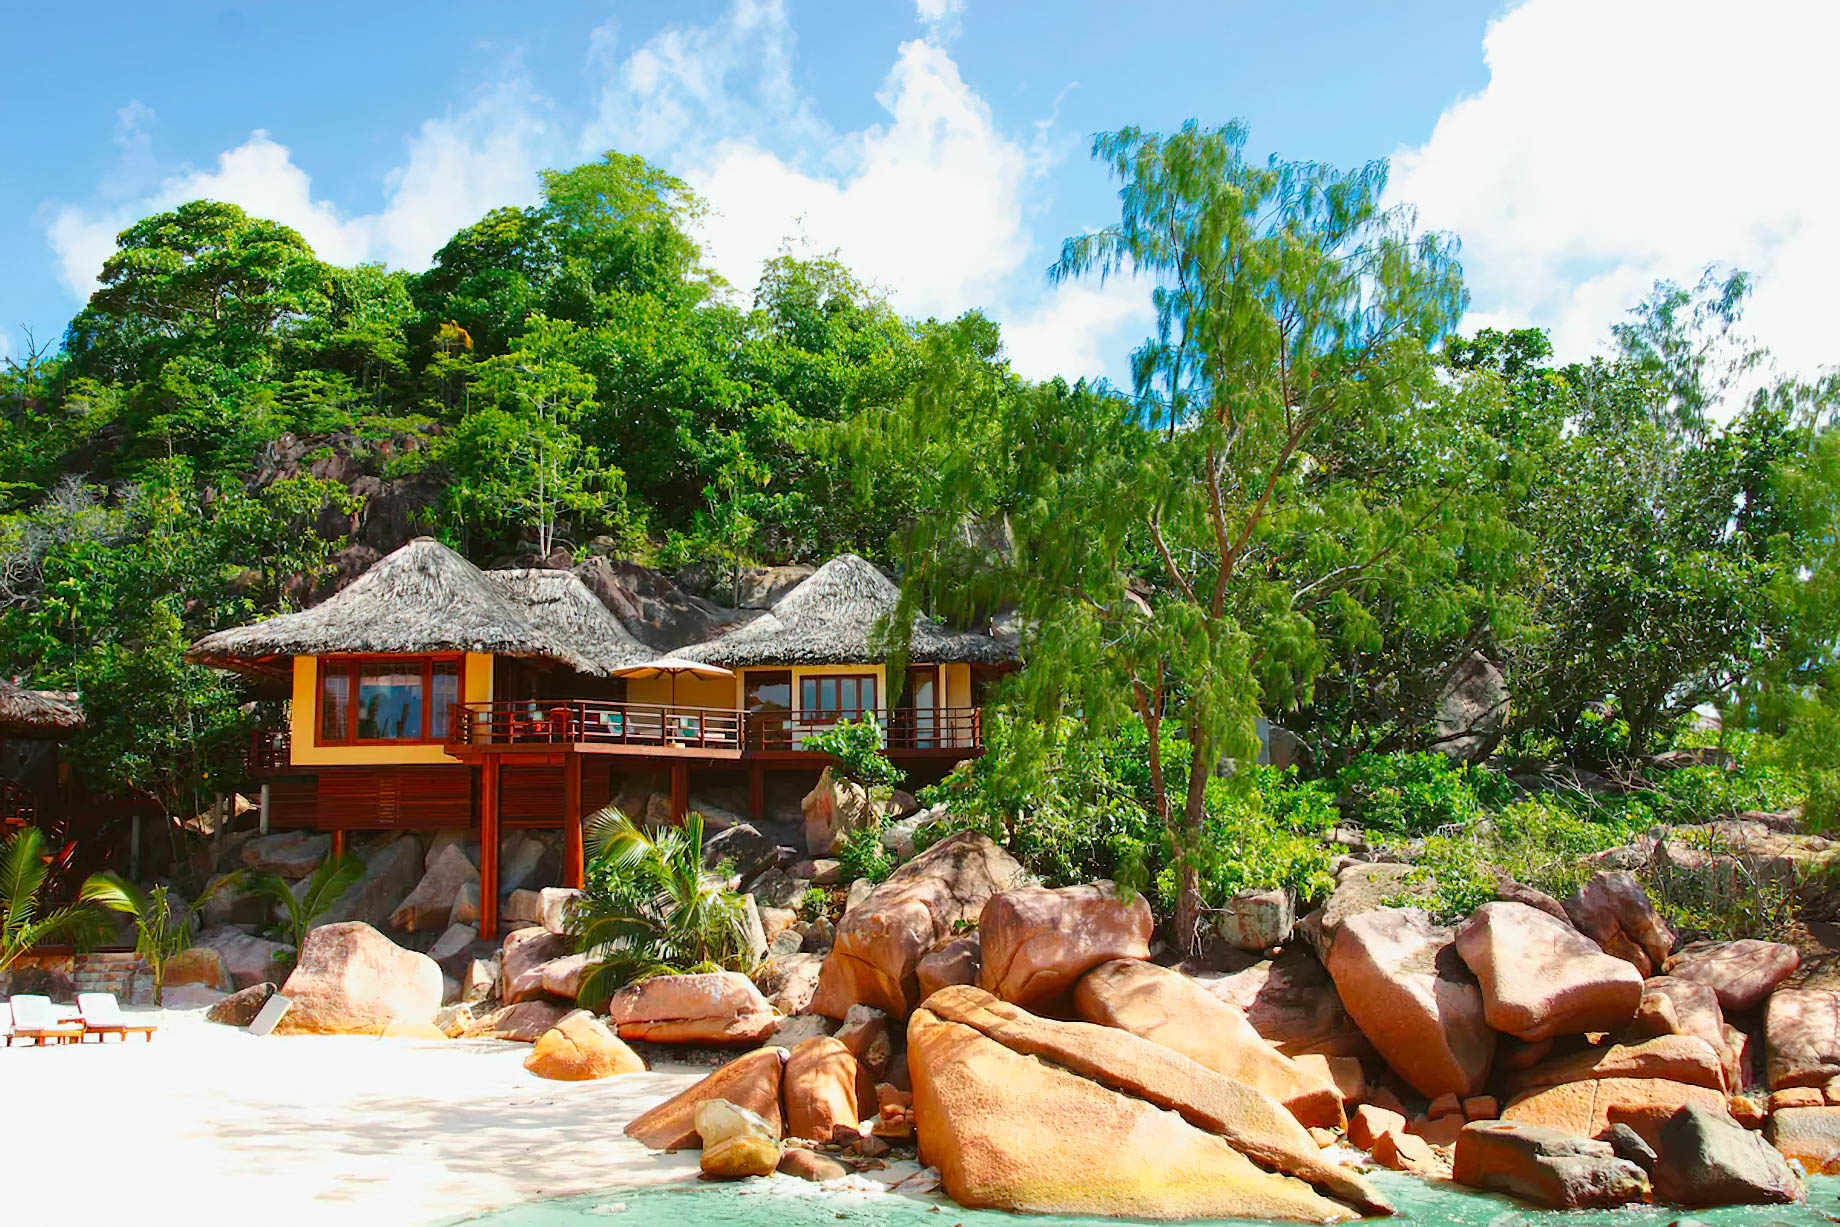 Constance Lemuria Resort – Praslin, Seychelles – Beach View